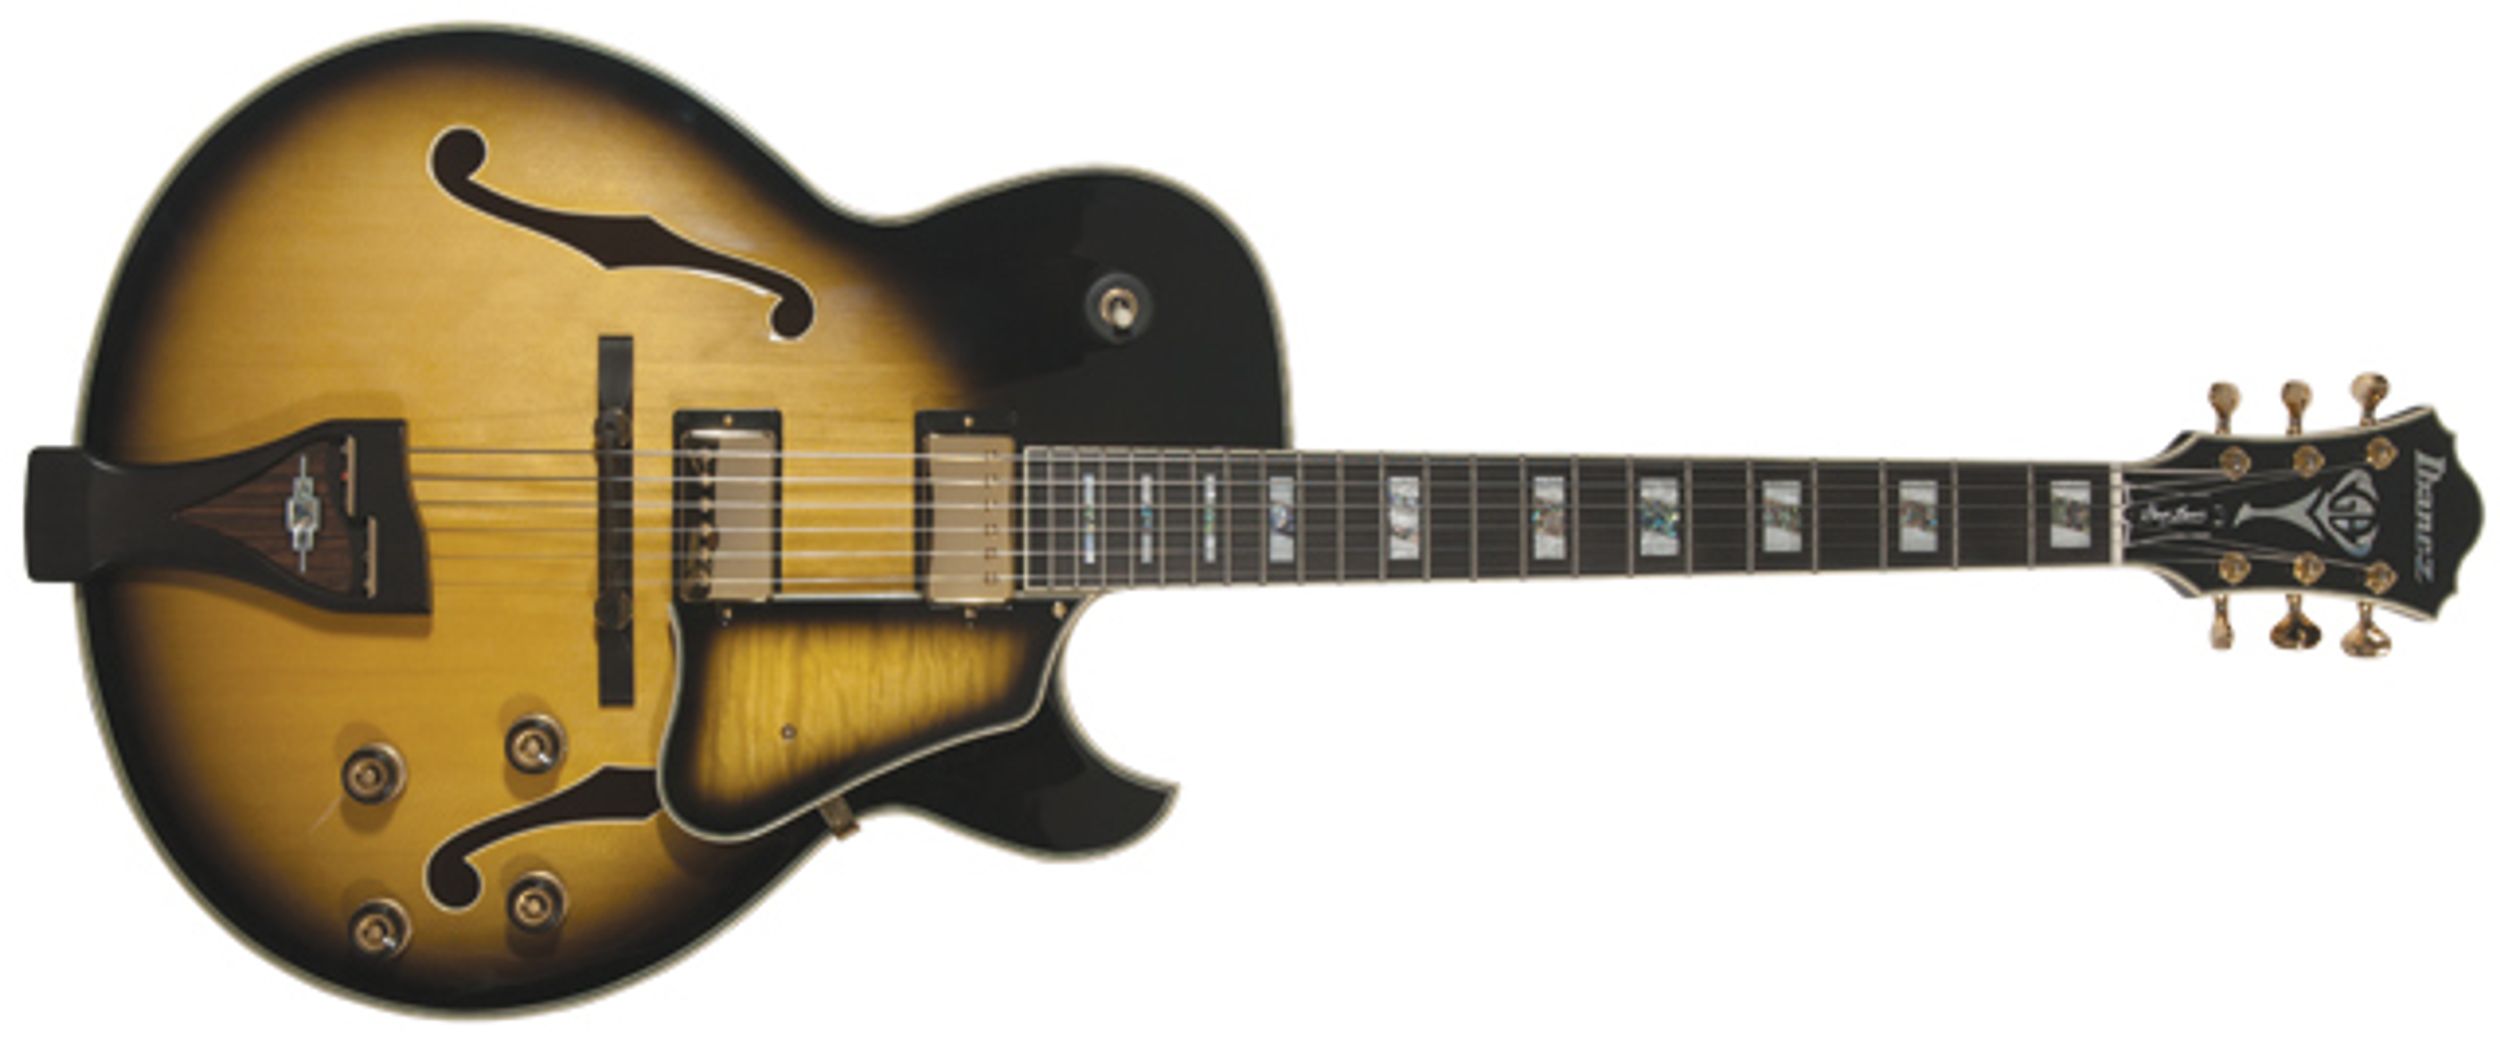 Ibanez GB300 George Benson Signature Guitar Review